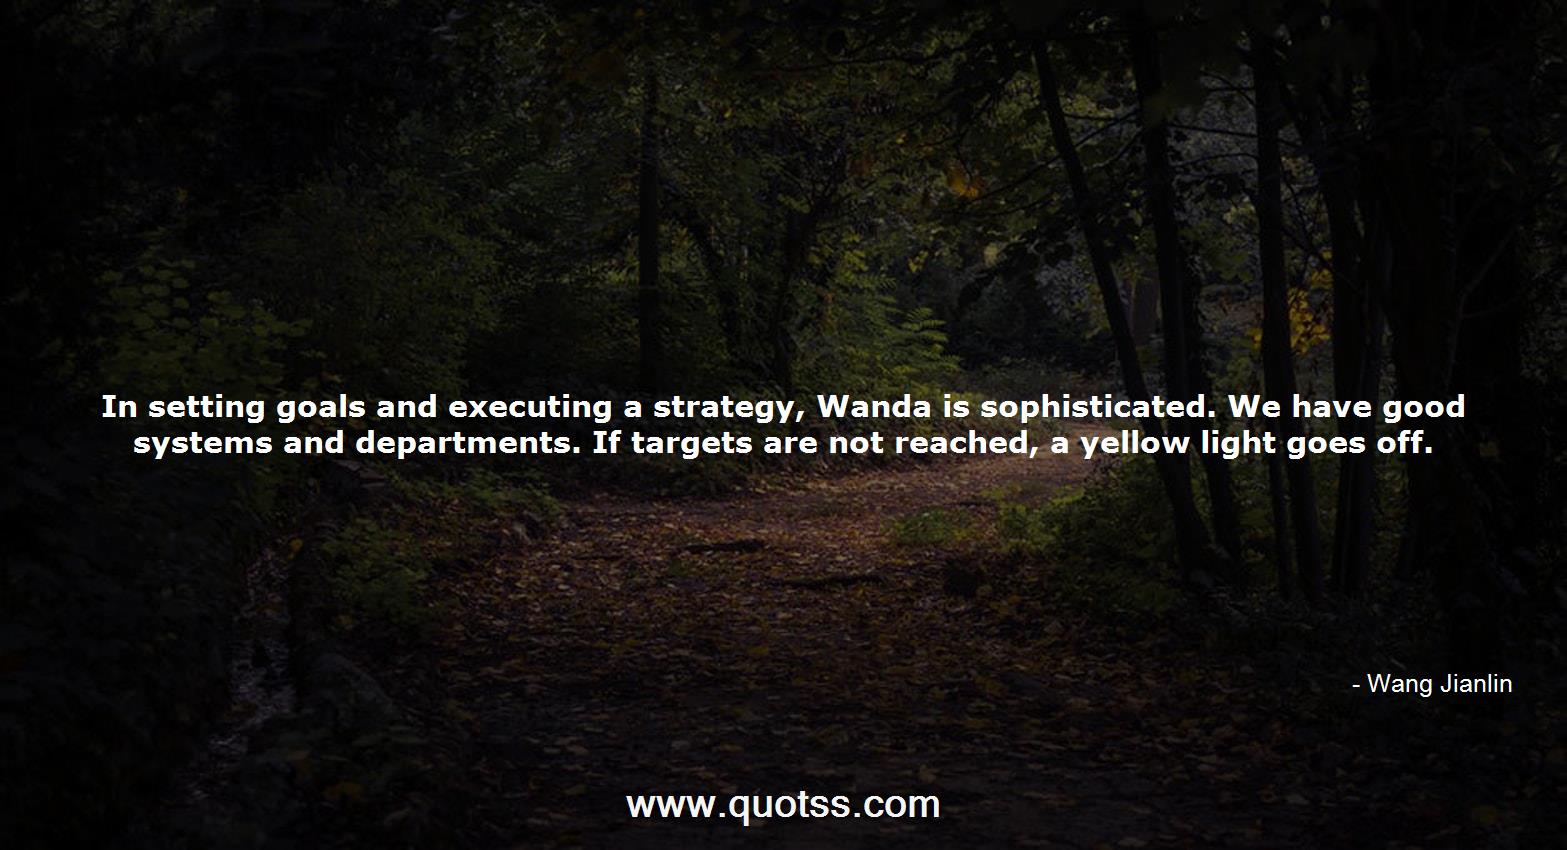 Wang Jianlin Quote on Quotss